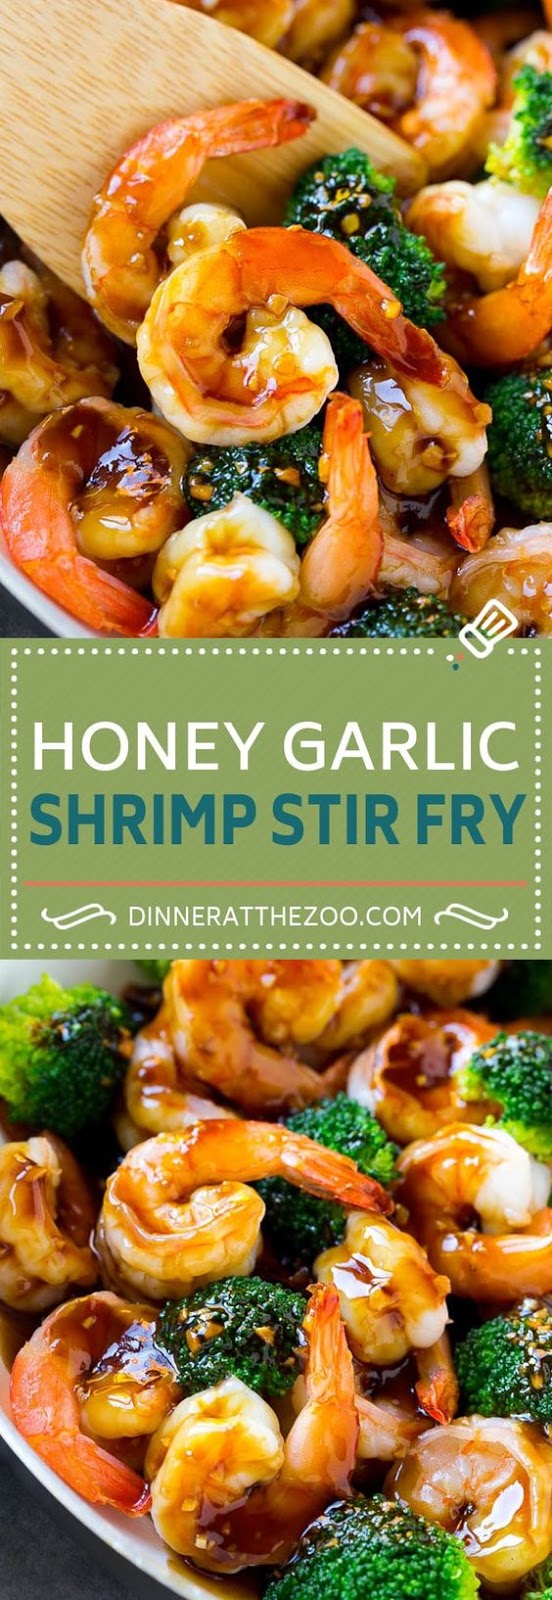 HONEY GARLIC SHRIMP STIR FRY - My Favorite food and Recipe